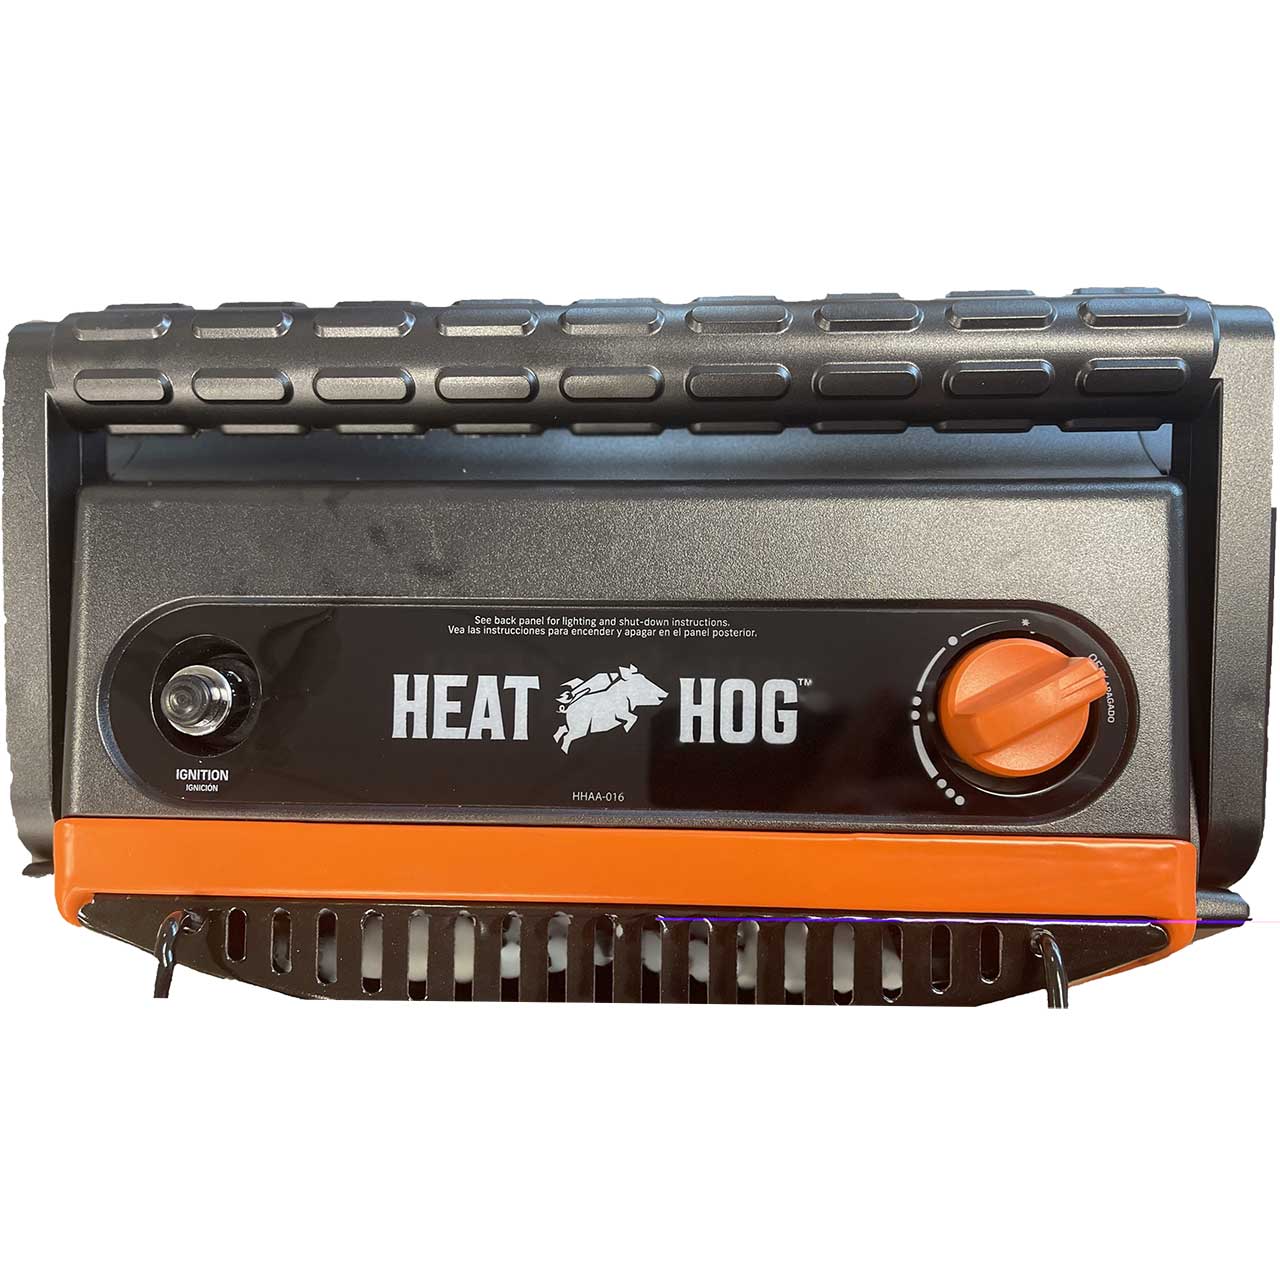 NEW! Heat Hog Portable Propane Heater 